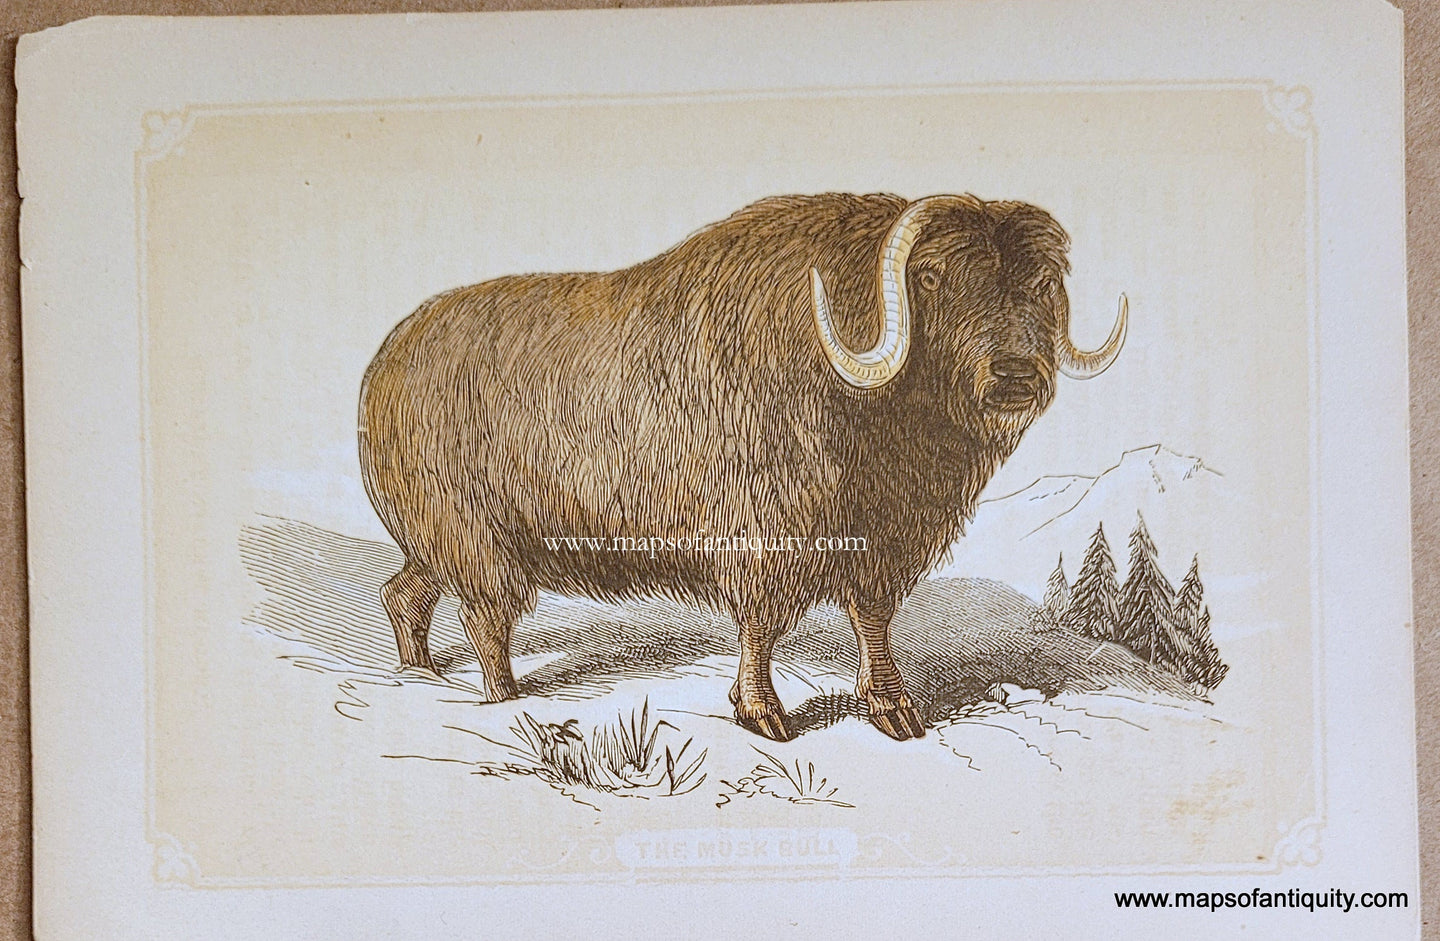 Genuine-Antique-Print-The-Musk-Bull-1850s-Tallis-Maps-Of-Antiquity